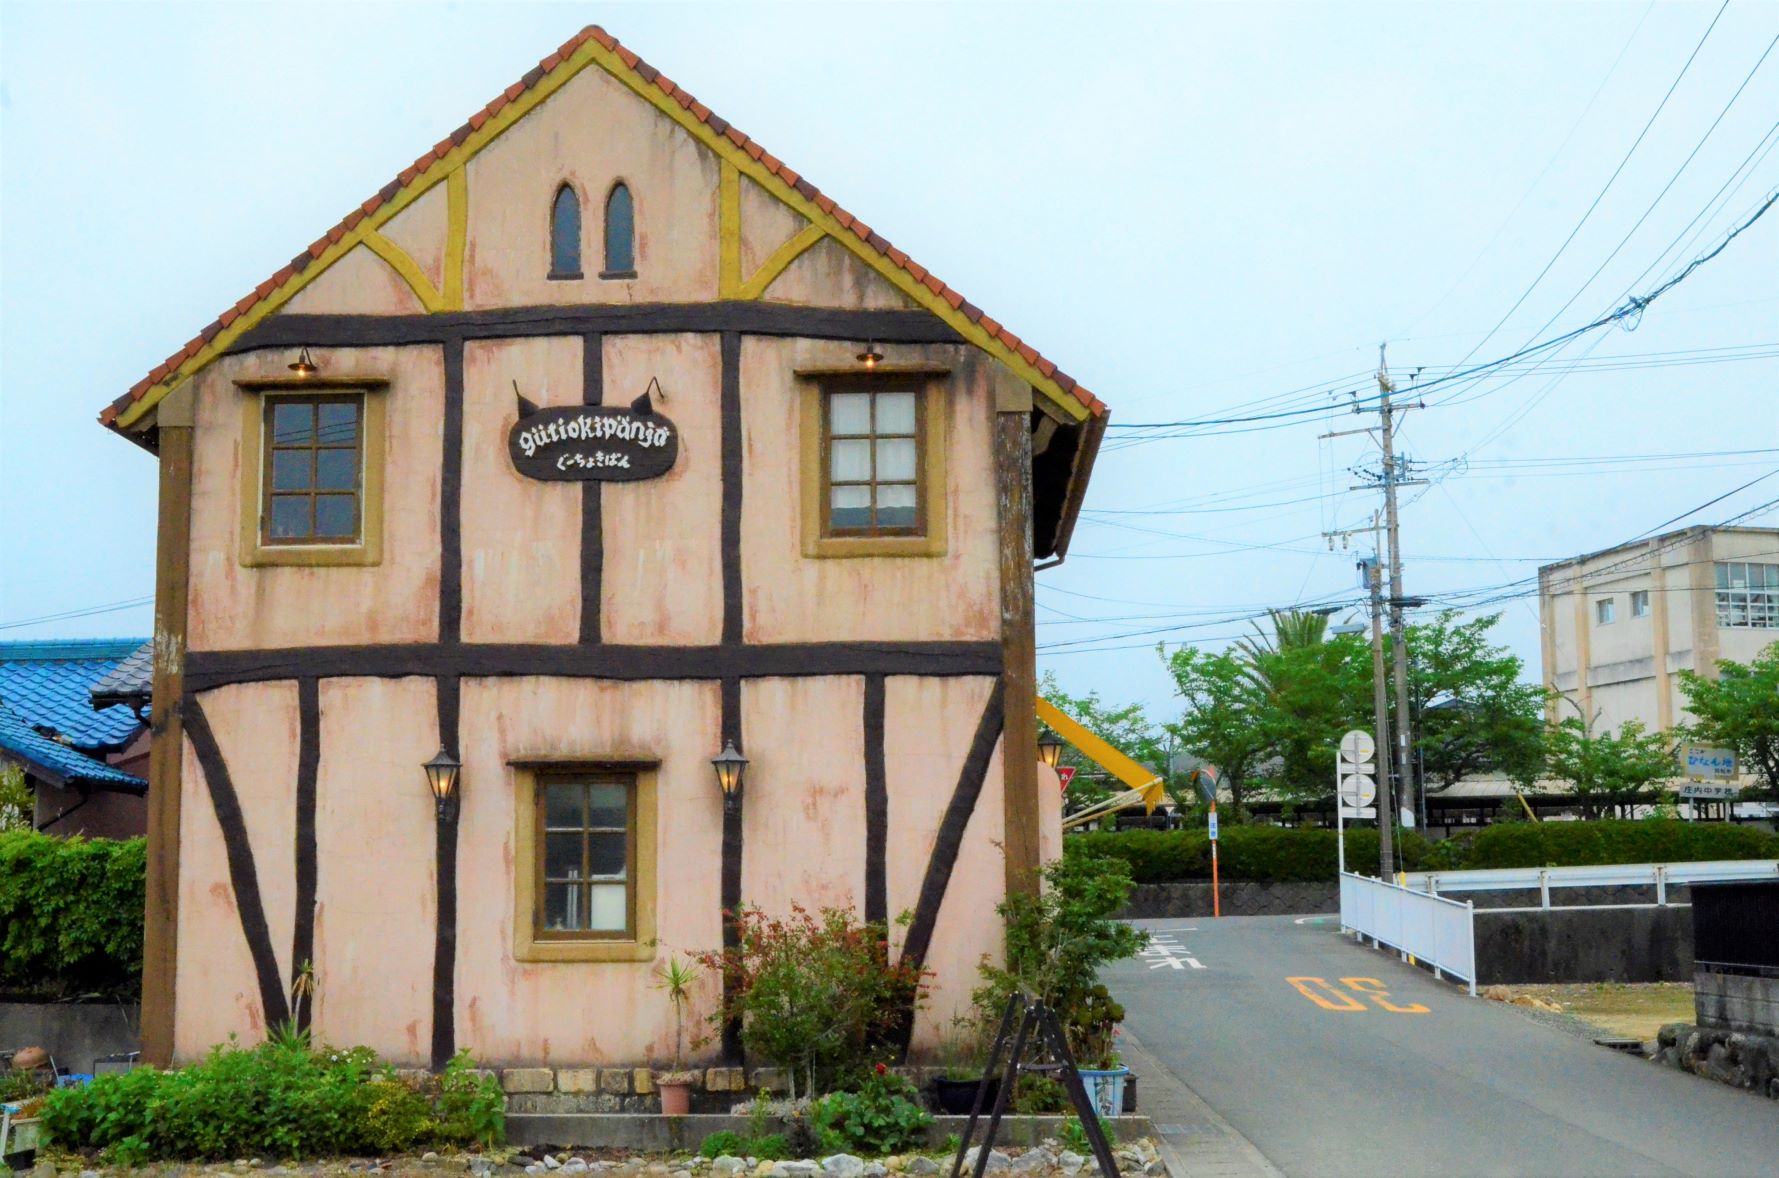 Hamamatsu's handmade bakery "Gutiokipan"